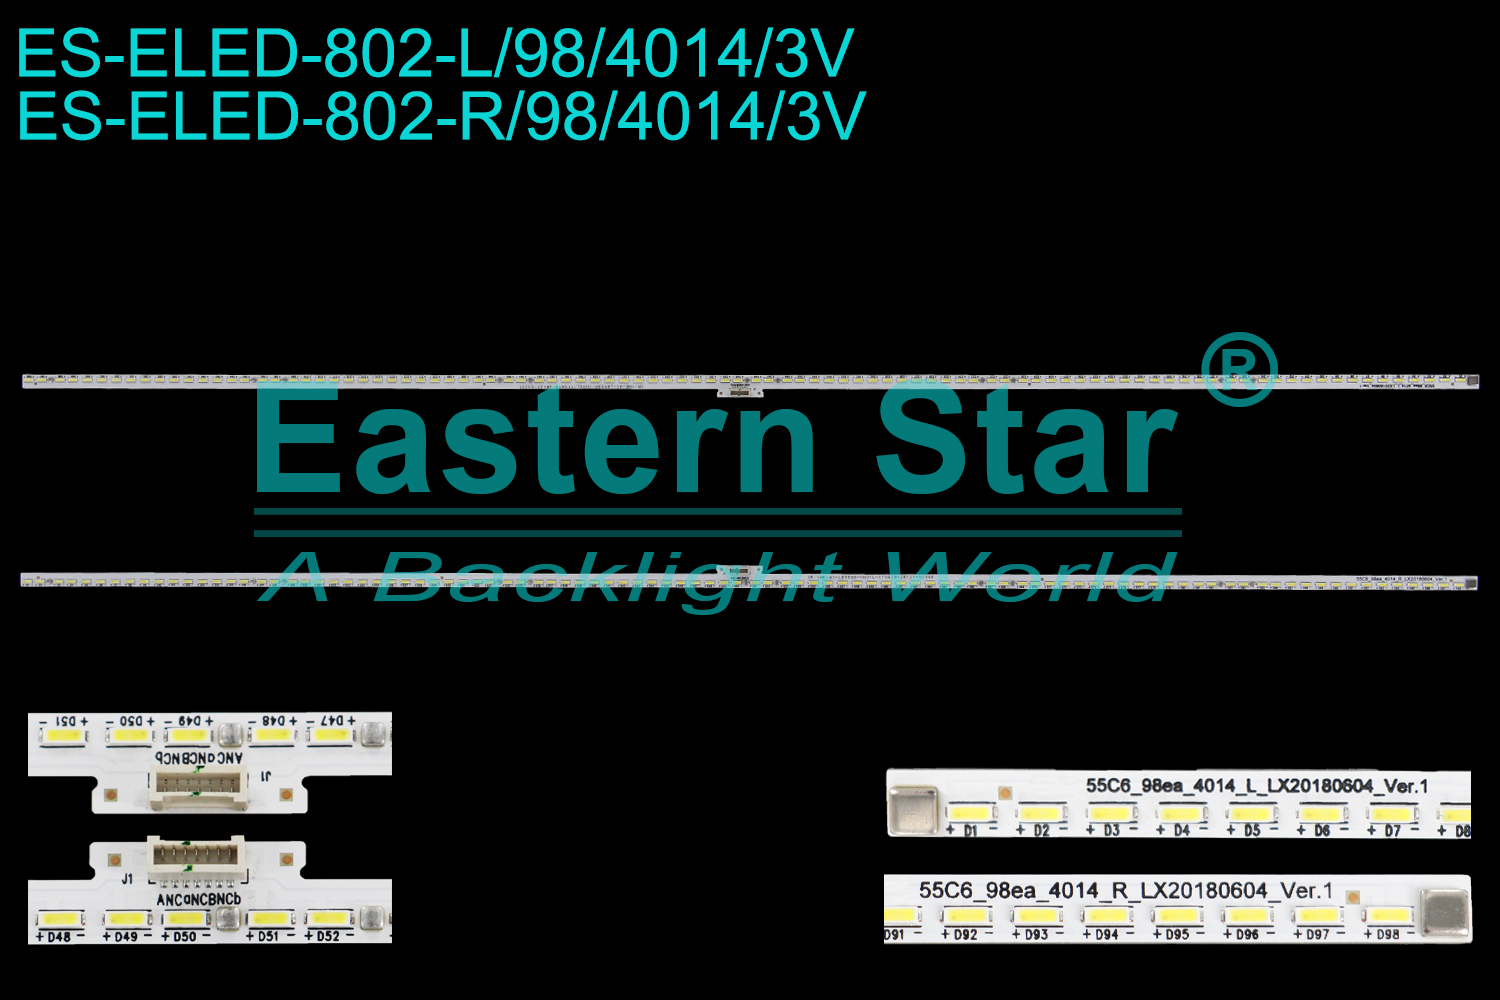 ES-ELED-802 ELED/EDGE TV backlight use for 55'' Tcl  55dc760 L: 55C6_98ea_4014_L_LX20180604_Ver.1 CR:YHE-4C-LB5598-YH02L-110419-2B21-00337 R: 55C6_98ea_4014_R_LX20180604_Ver.1 CR:YHE-4C-LB5598-YH01L-110419-2B21-00348 LED STRIPS(/)